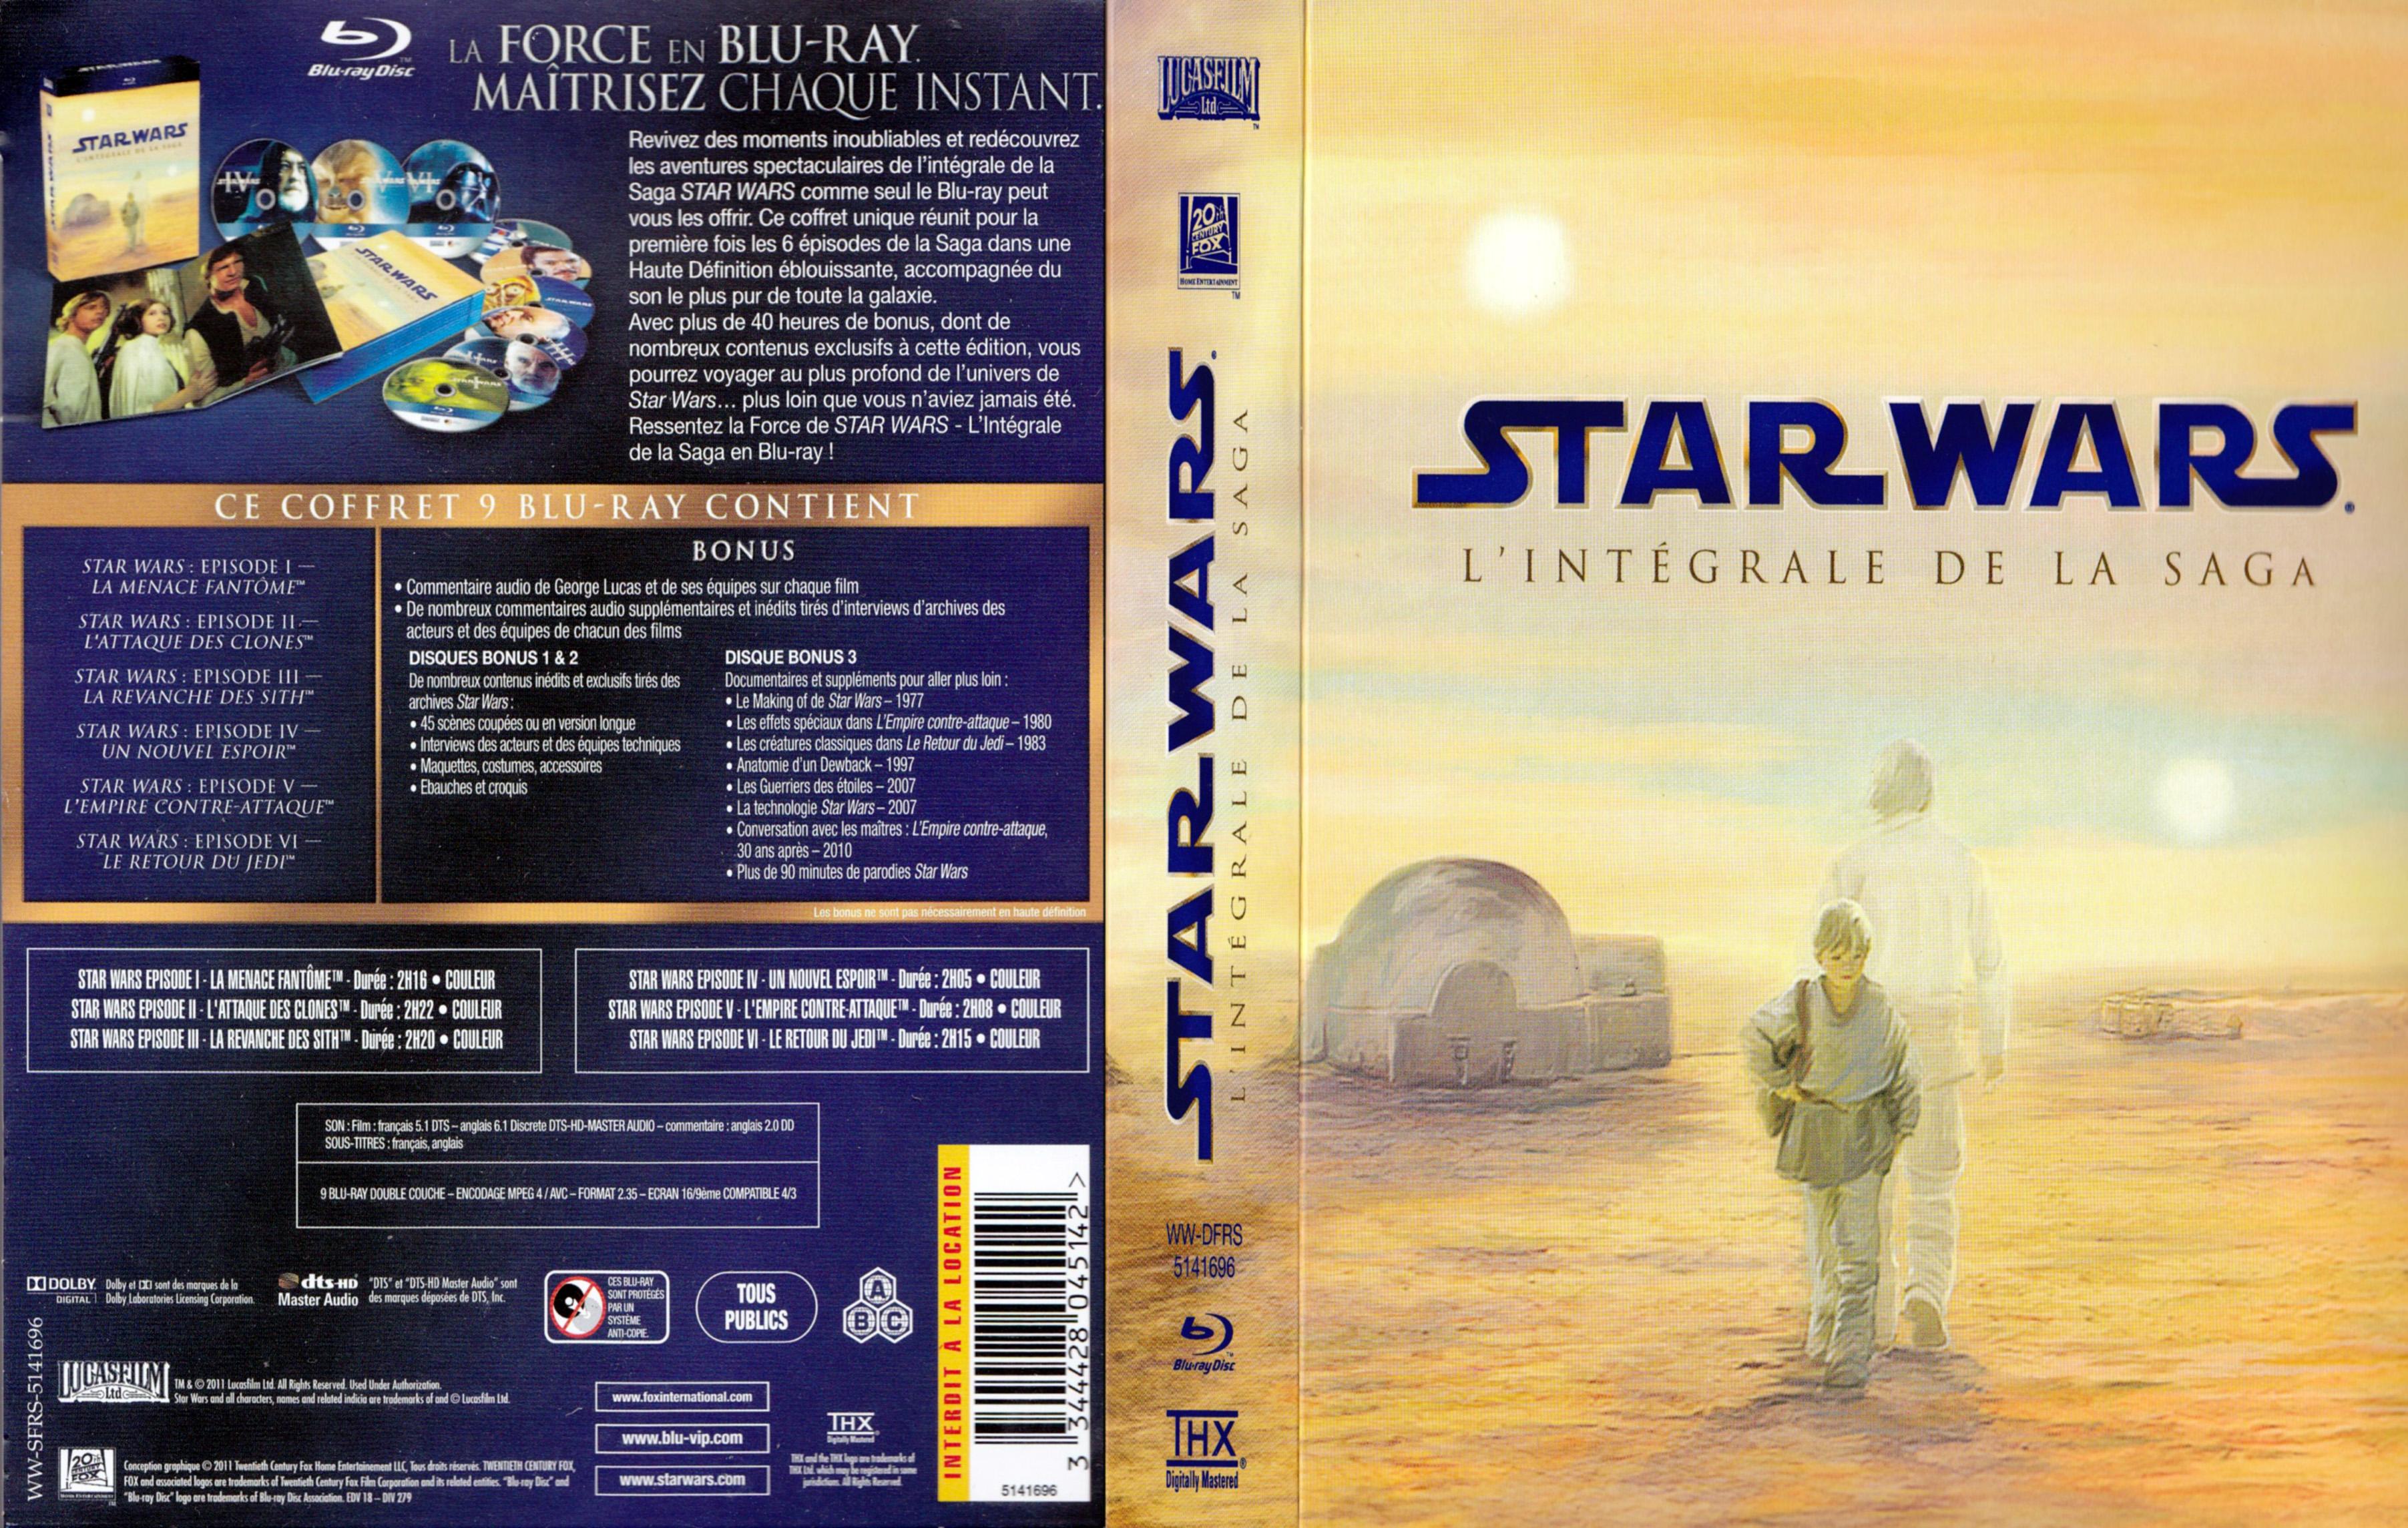 Jaquette DVD Star wars Intgrale (BLU-RAY)